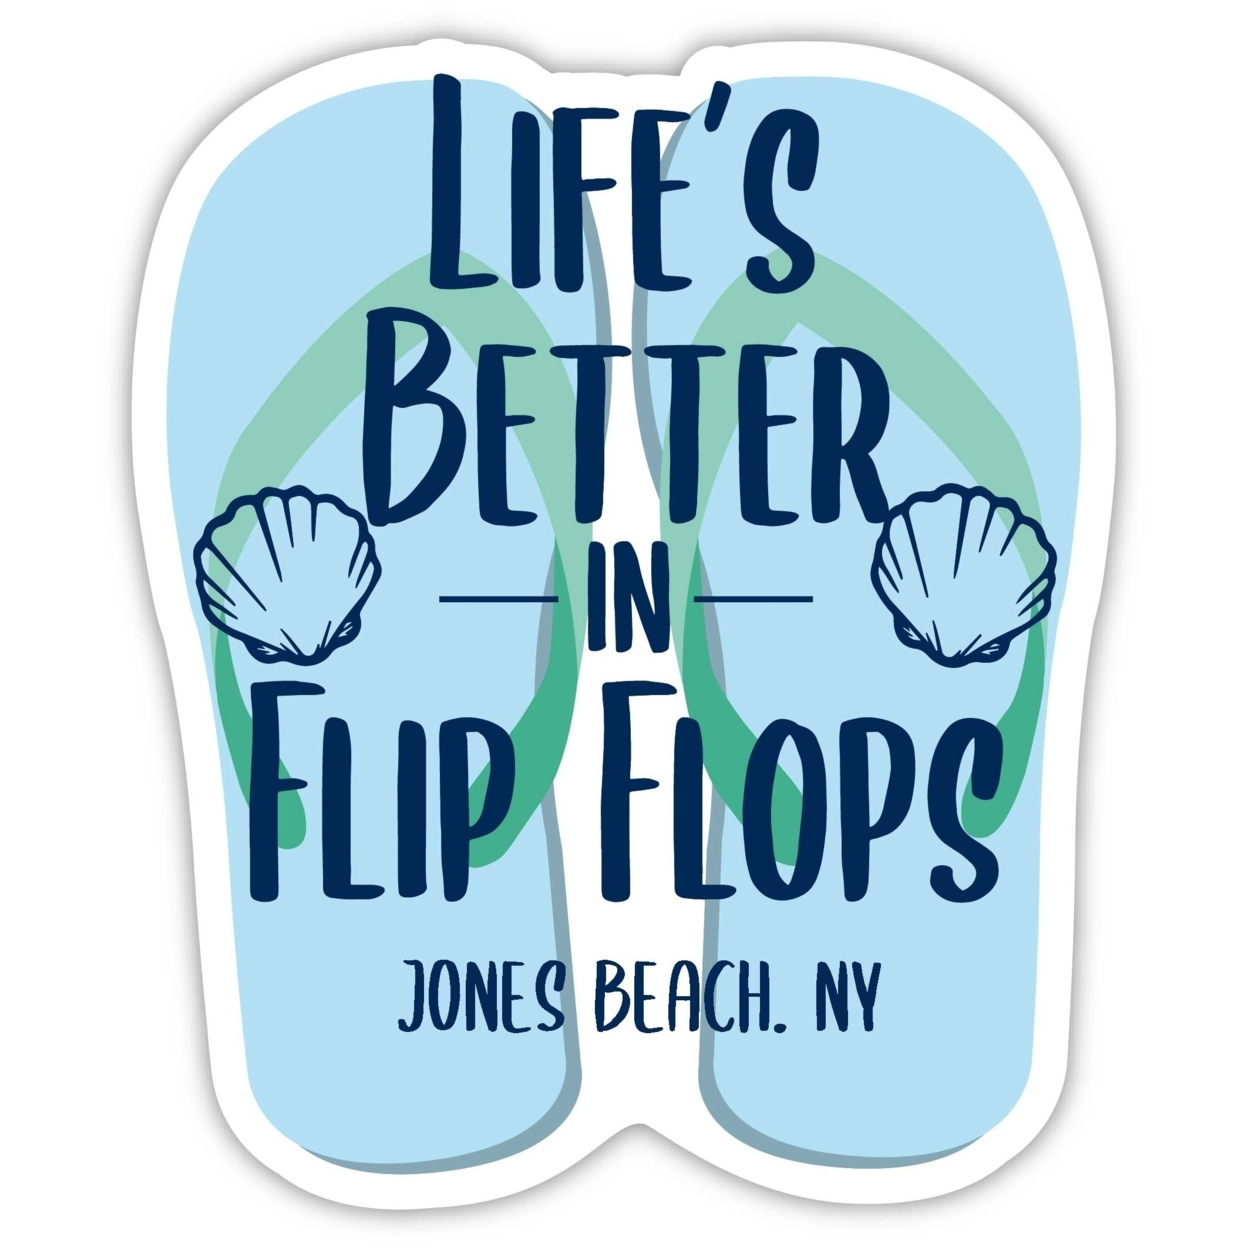 Jones Beach New York Souvenir 4 Inch Vinyl Decal Sticker Flip Flop Design